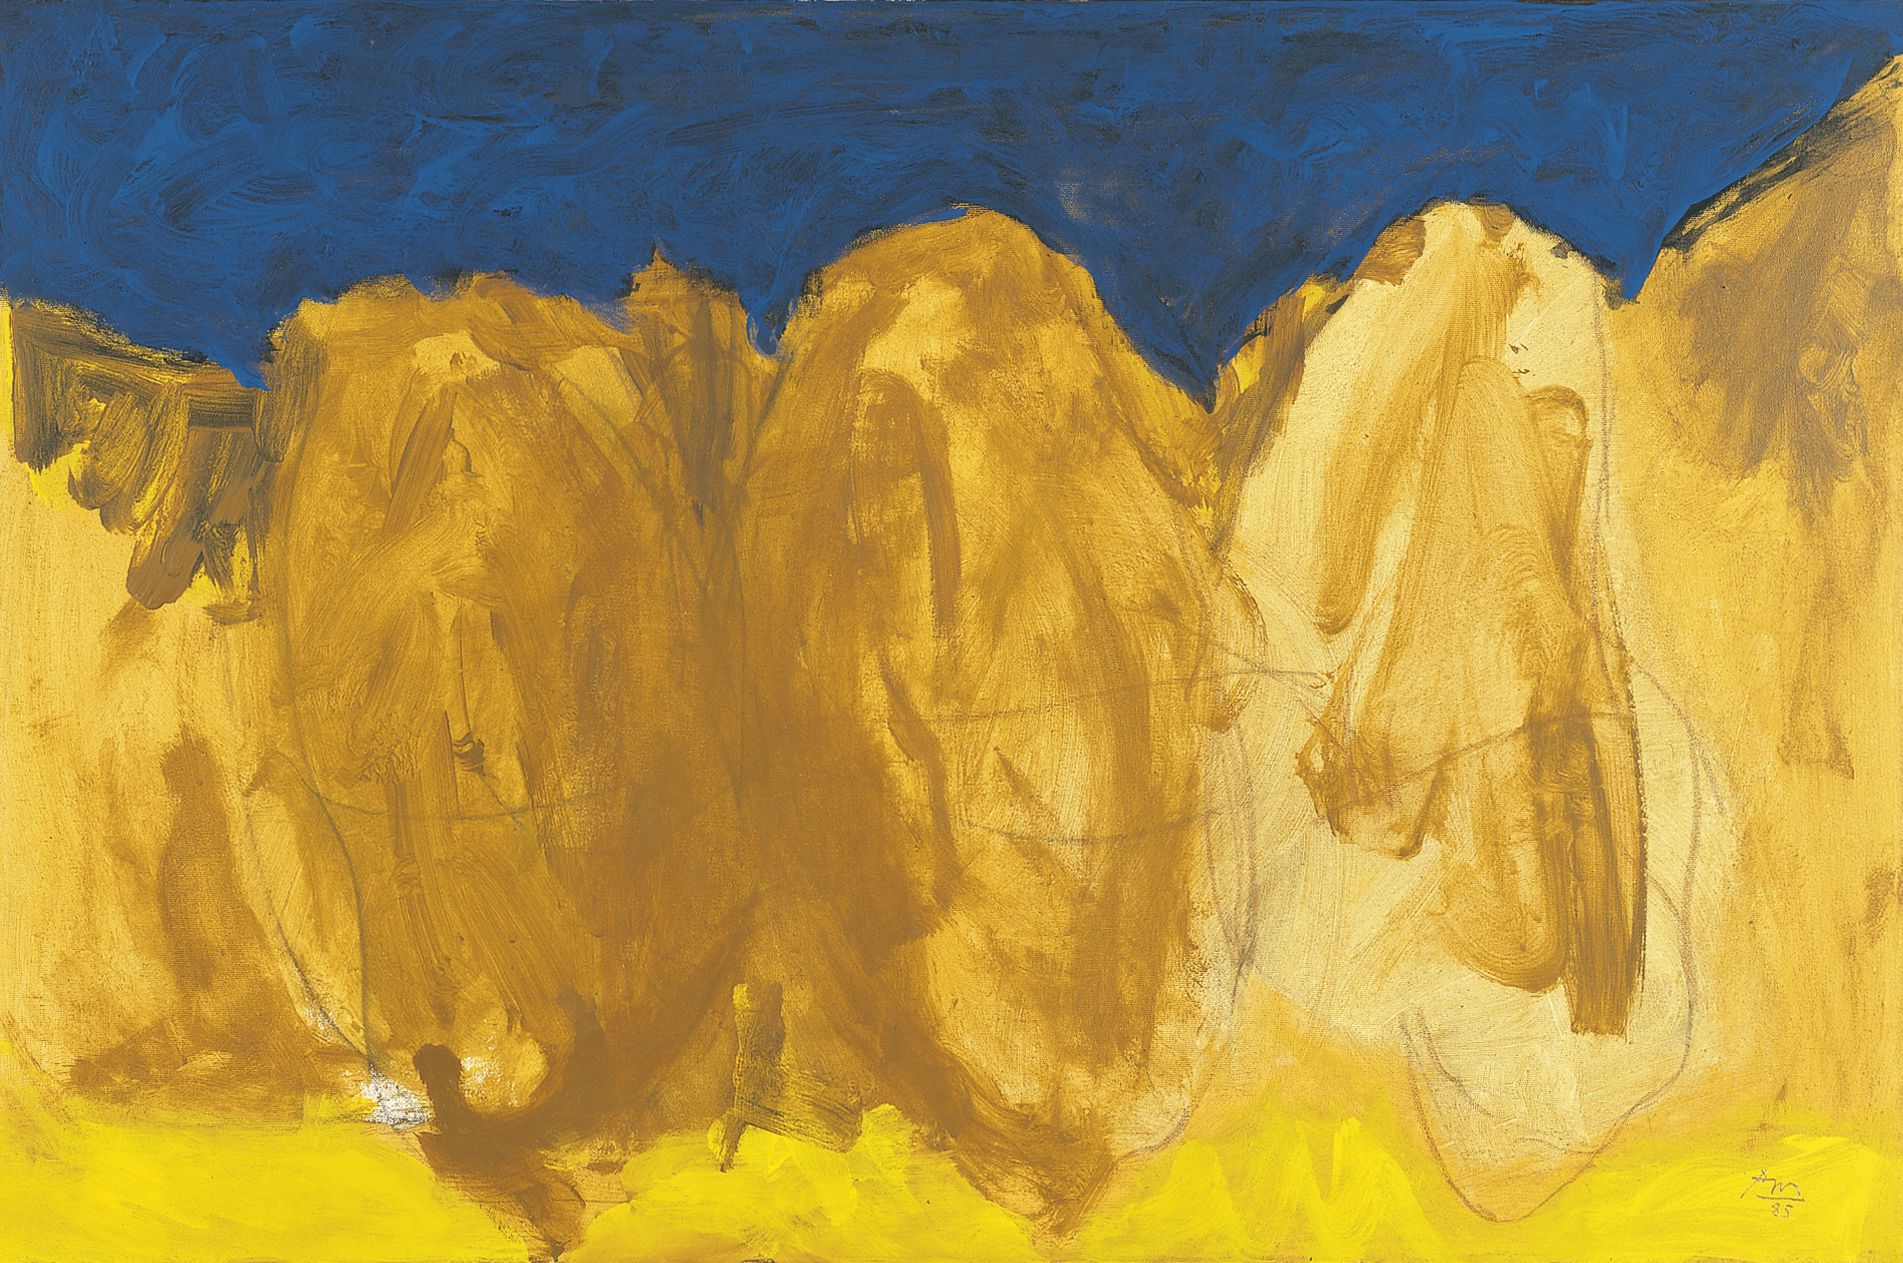 Hollow Men Study (Trio V), 1985. Acrylic, conté crayon, and graphite on canvas, 24 x 36 inches (61 x 91.4 cm)